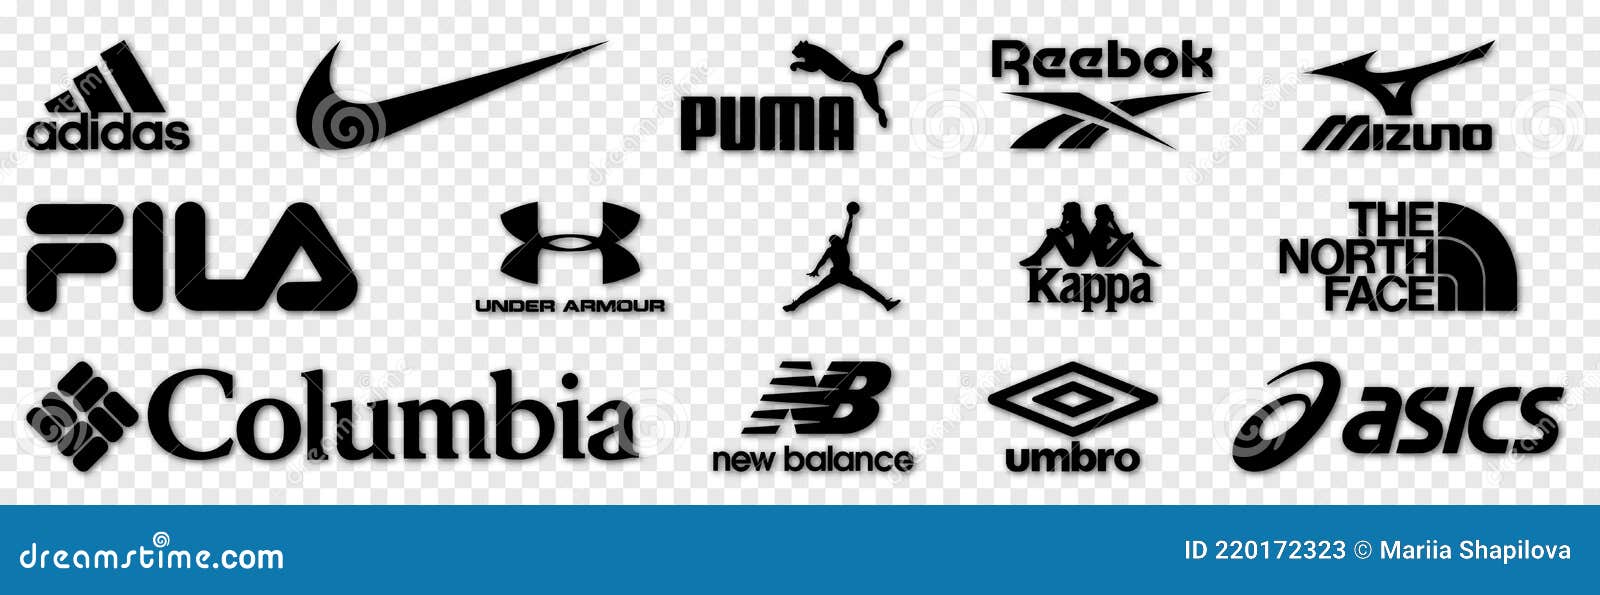 Tenis y Ropa Deportiva: Adidas, Nike, Fila